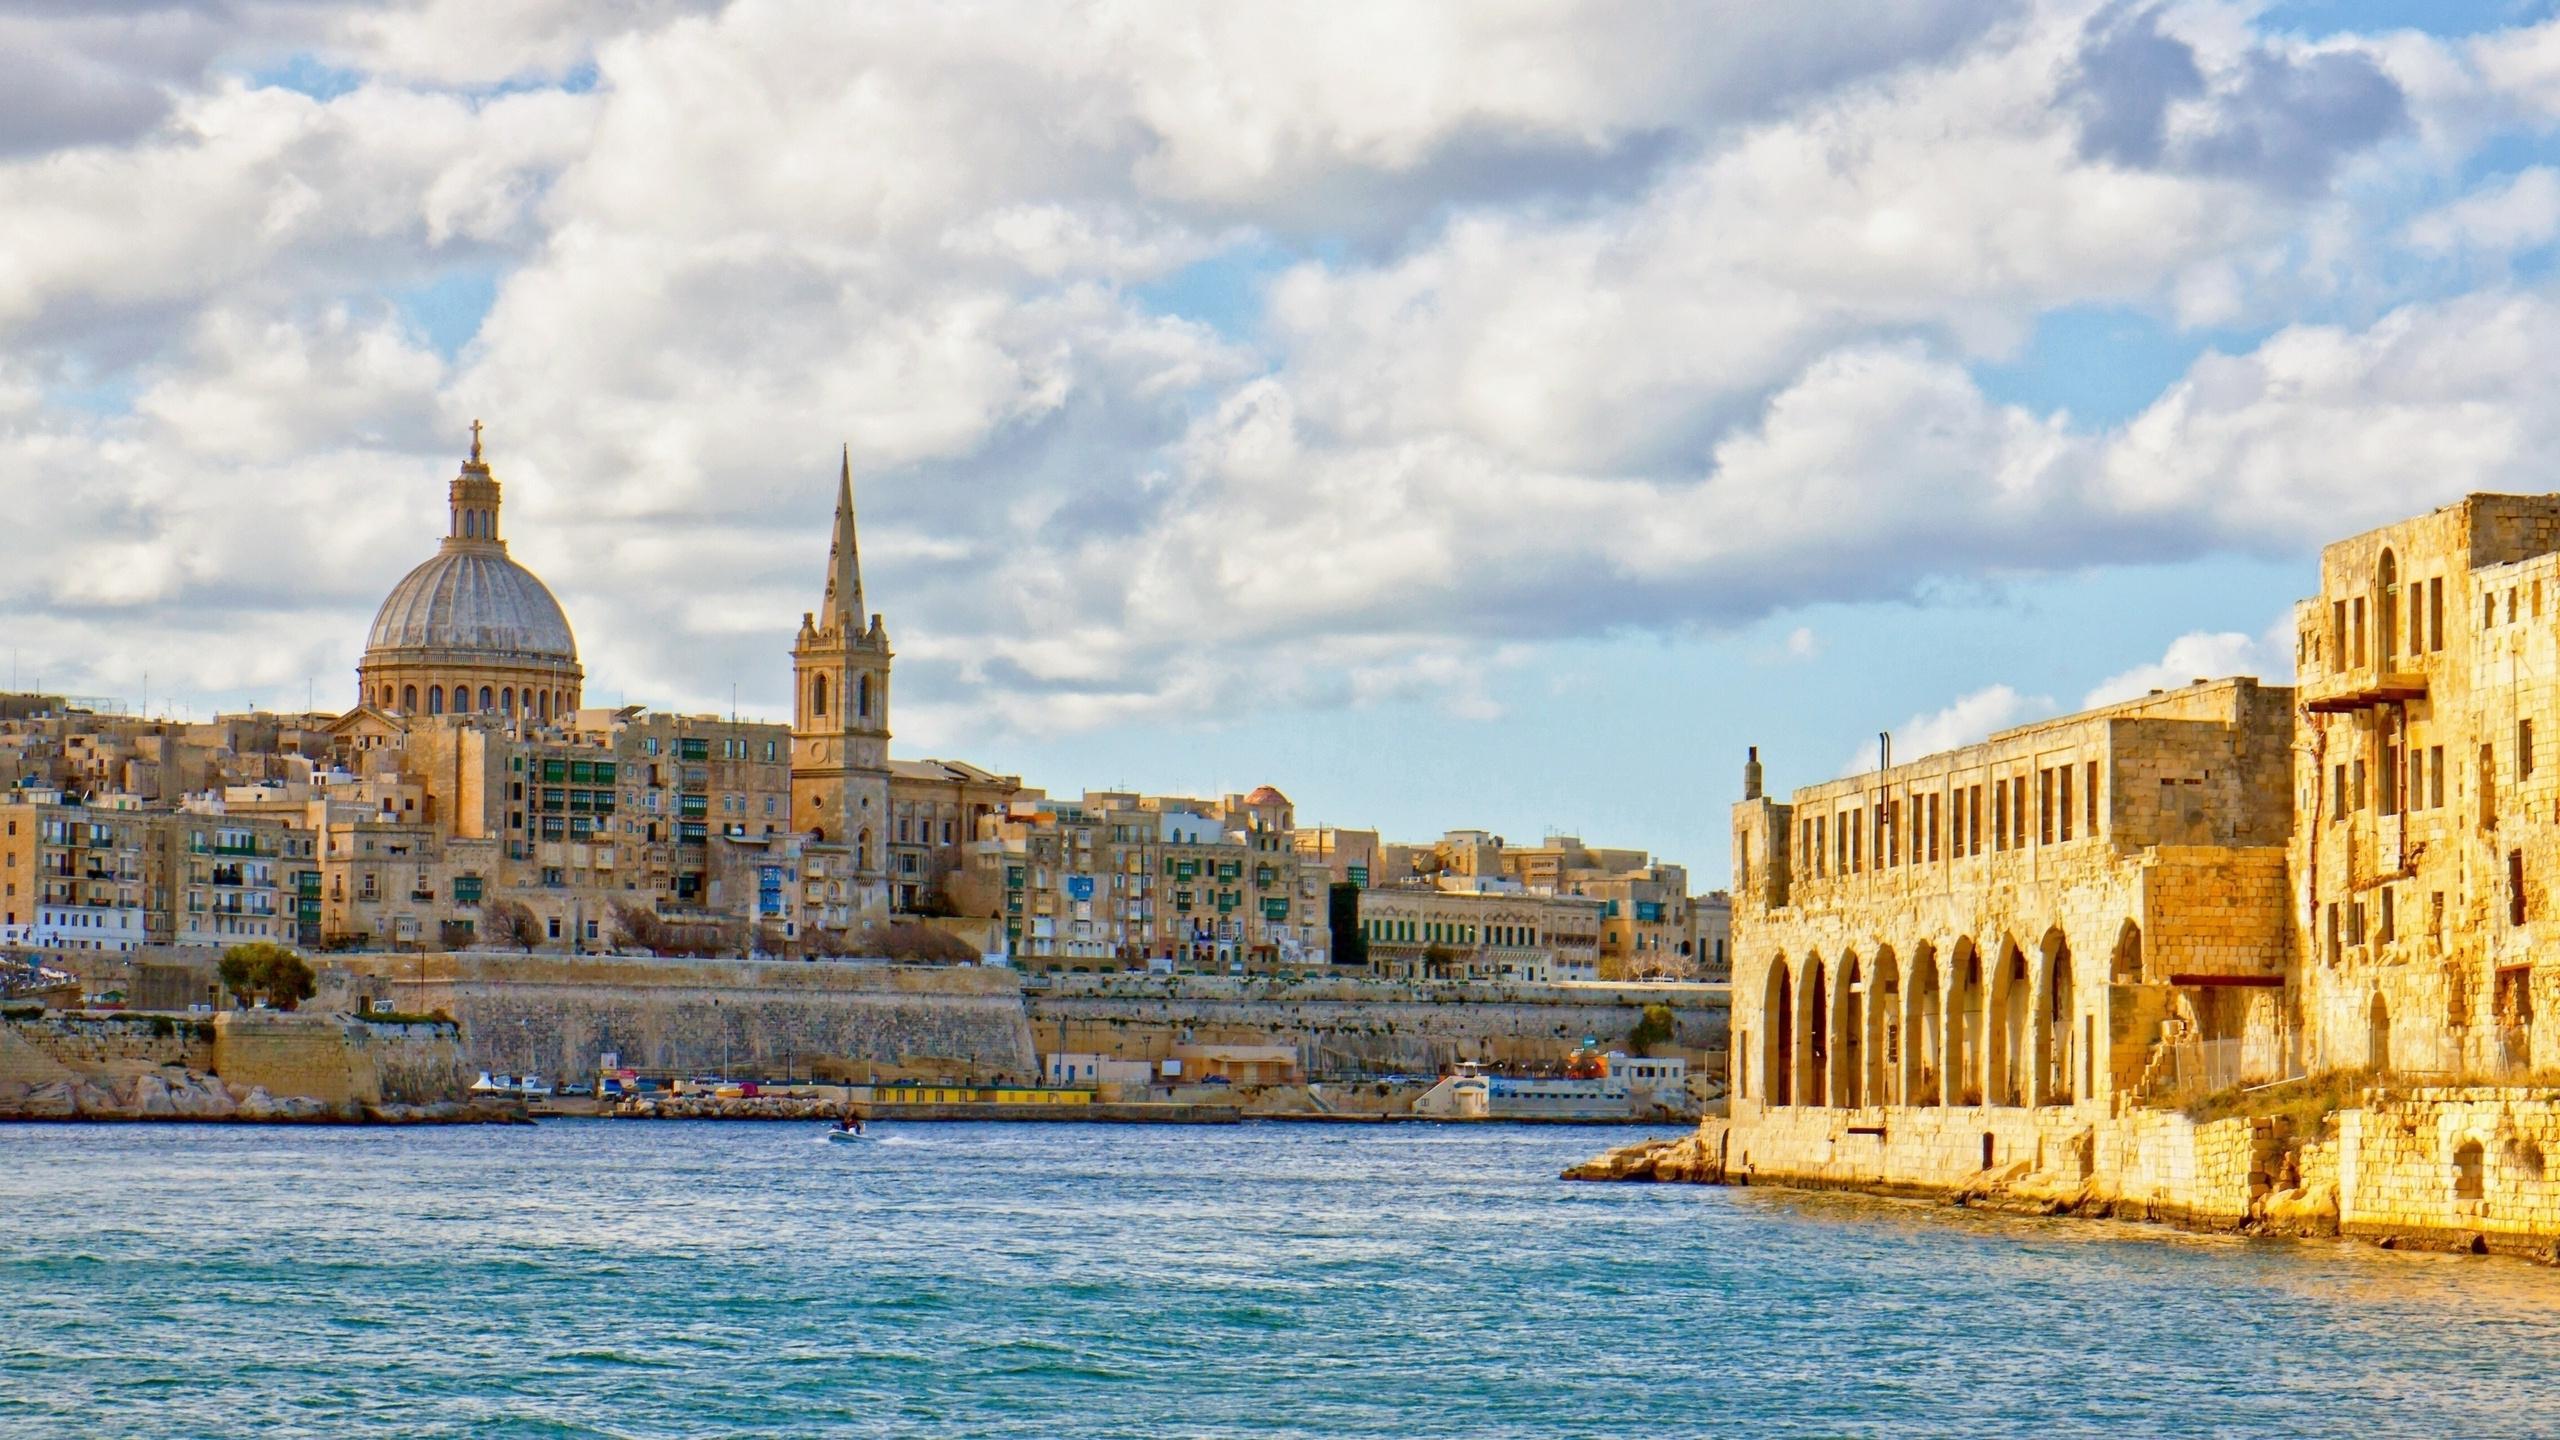 Download 2560x1440 Valletta wallpaper